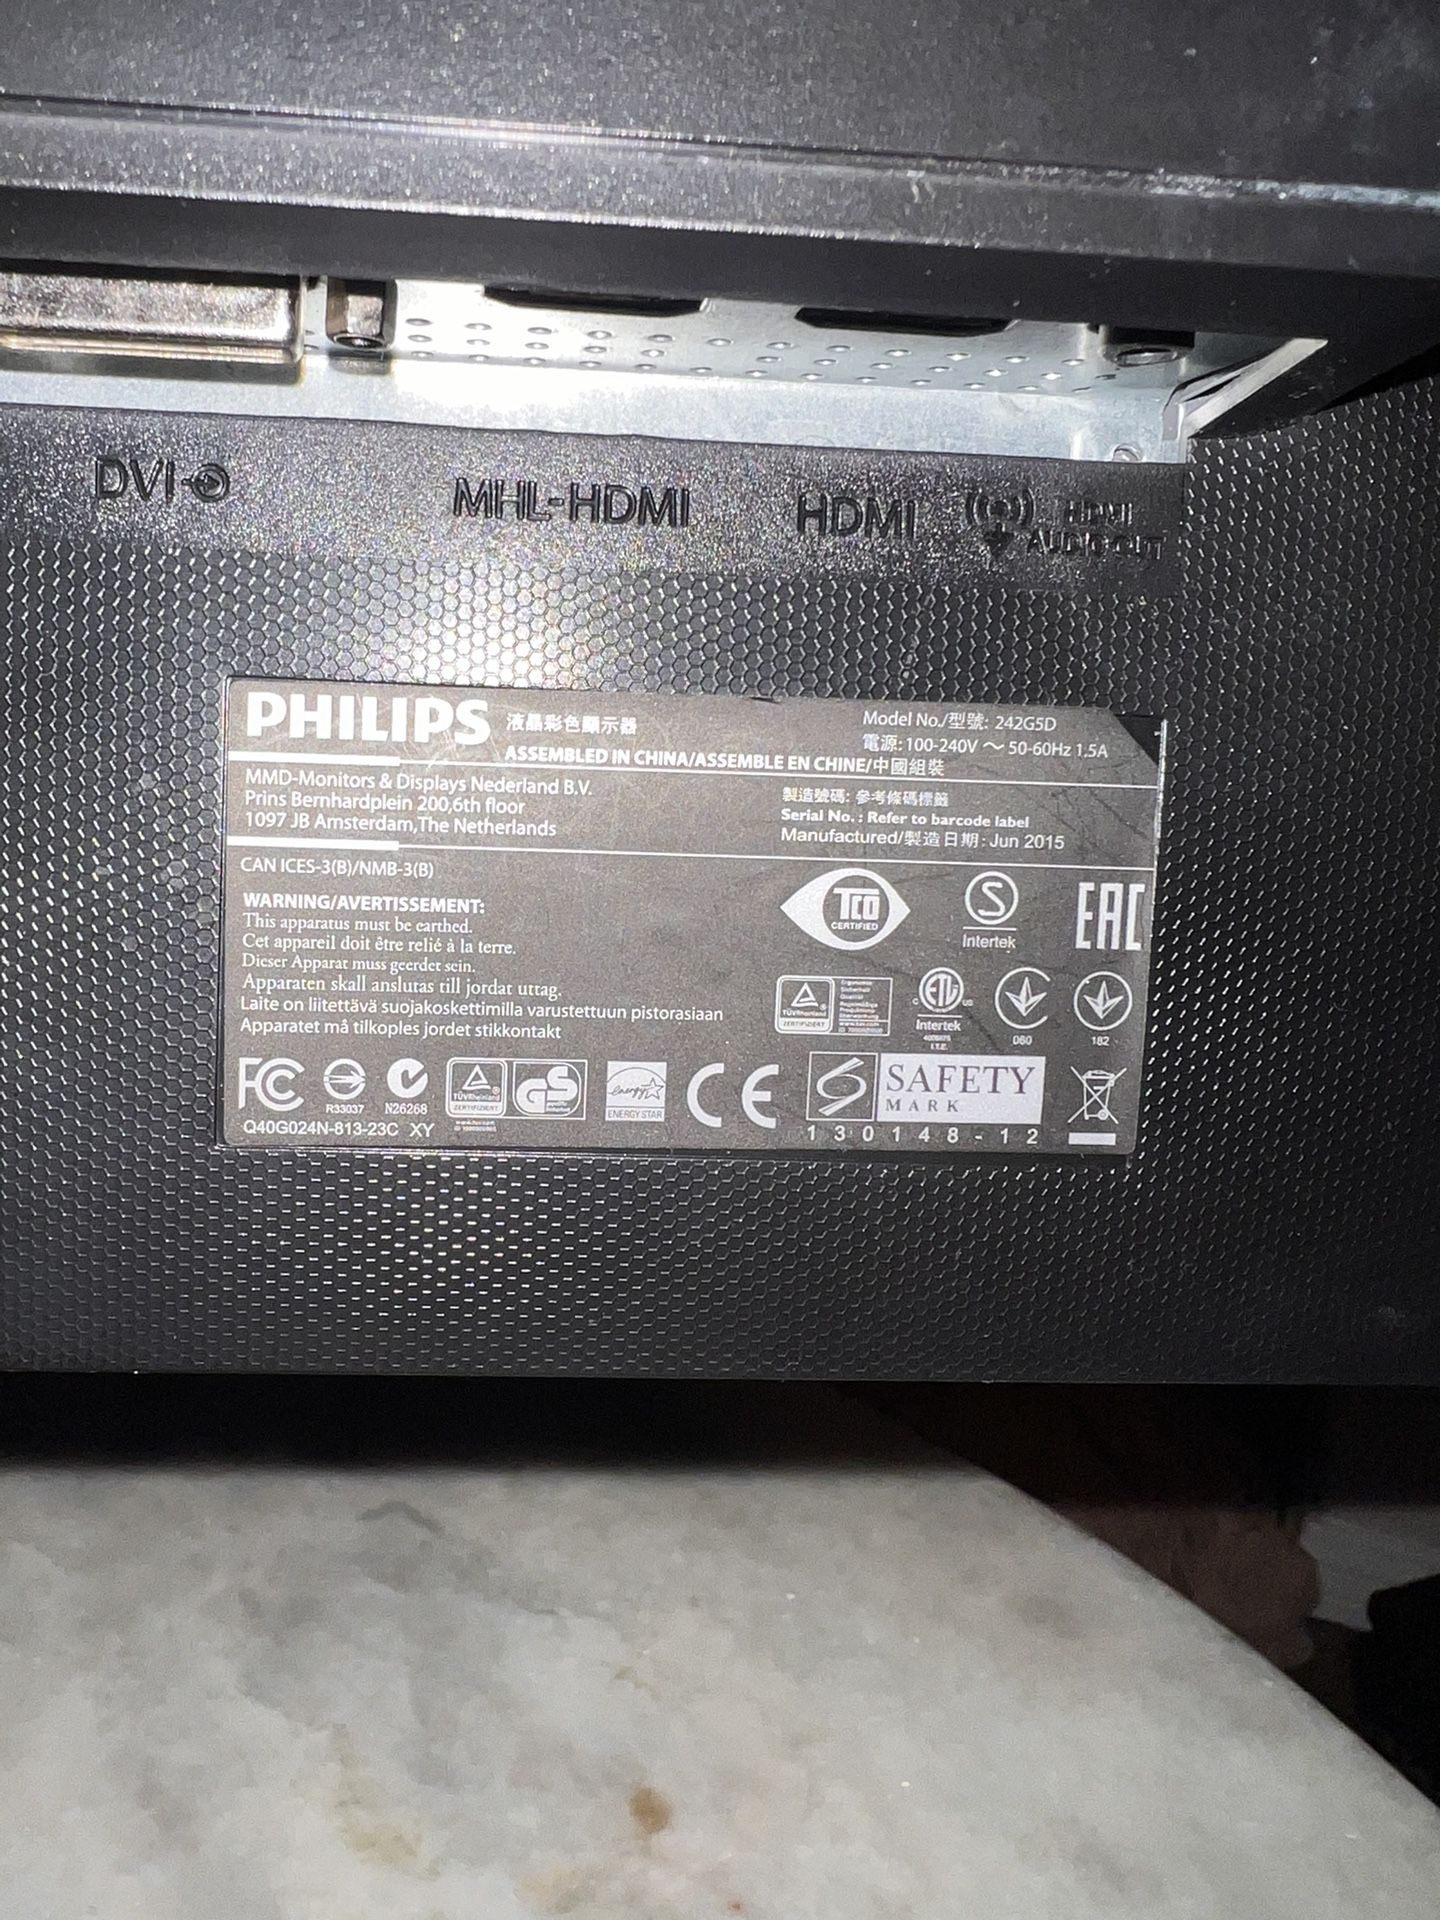 Philips 242g5 144hz LCD Gaming Monitor